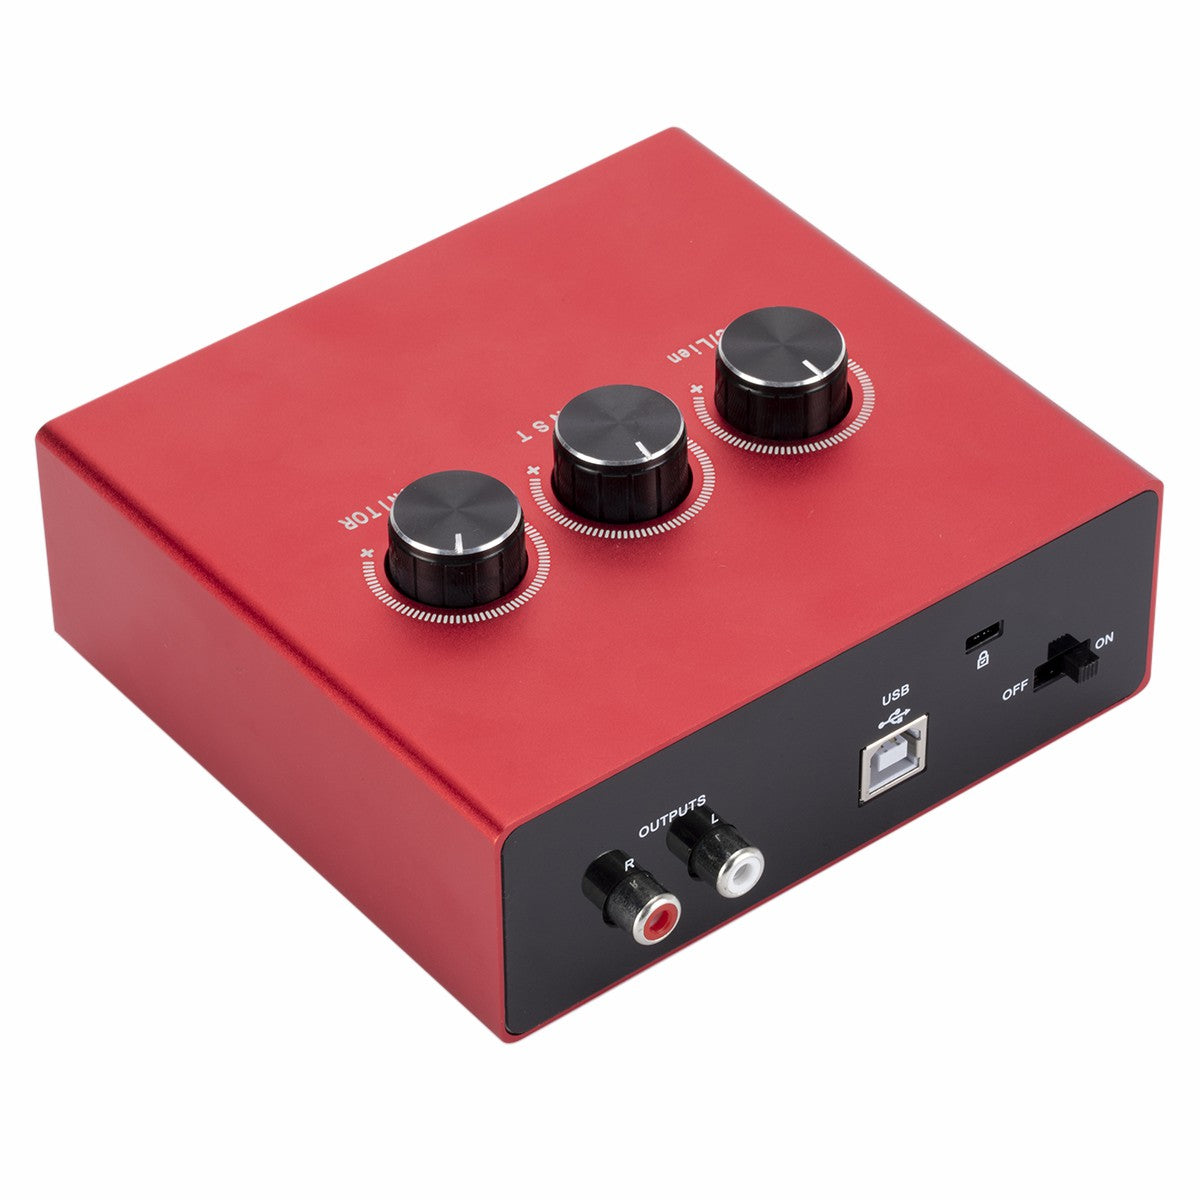 YJ Mixer External USB Sound Card Audio Interface Card Converter Adapter for Singing Studio Recording